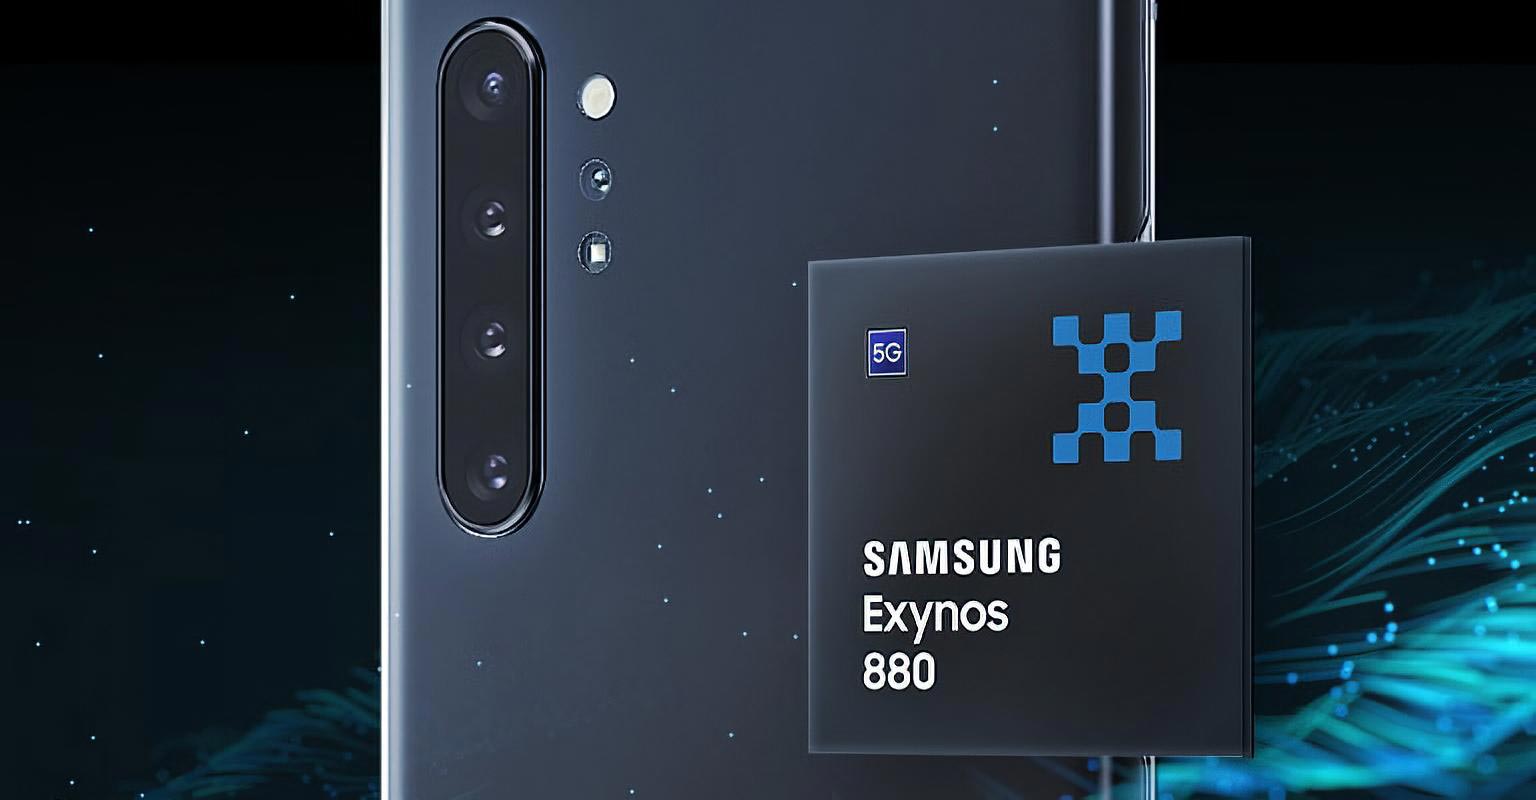 Samsung Exynos 880 Processor With Mobile Rear Camera